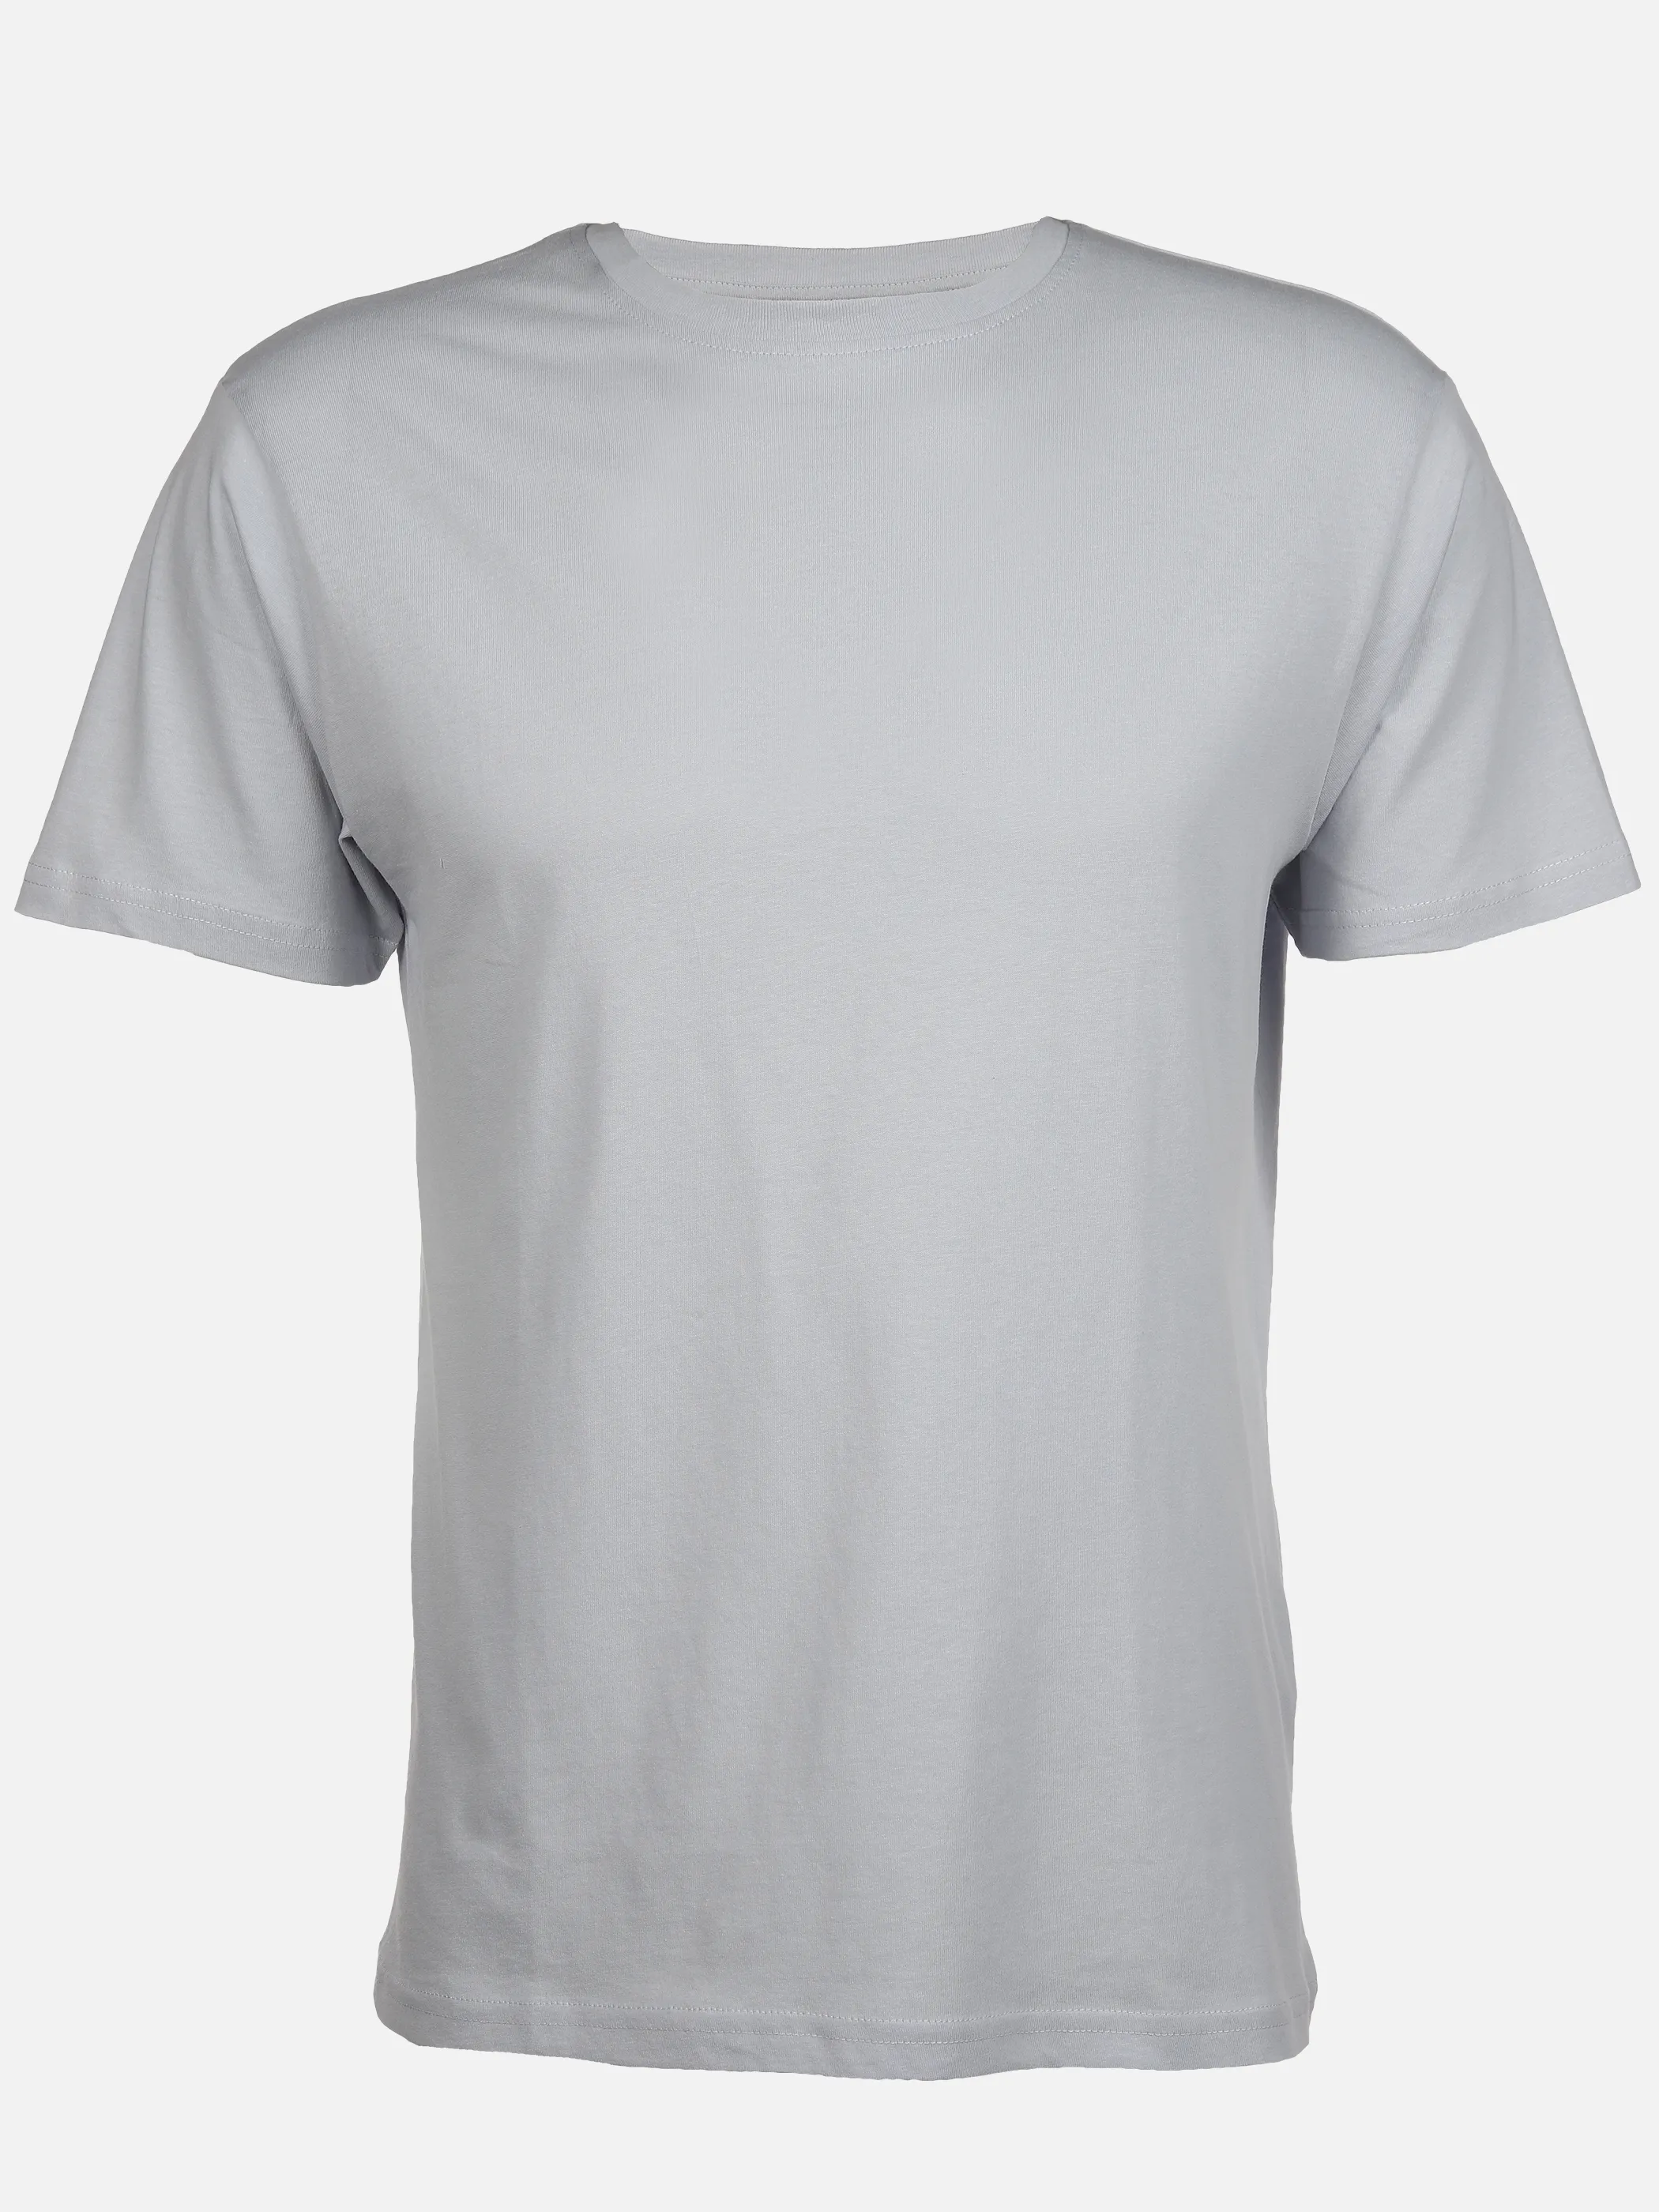 One Way YF-He T-Shirt Basic Silber 890068 14-4106TCX 1